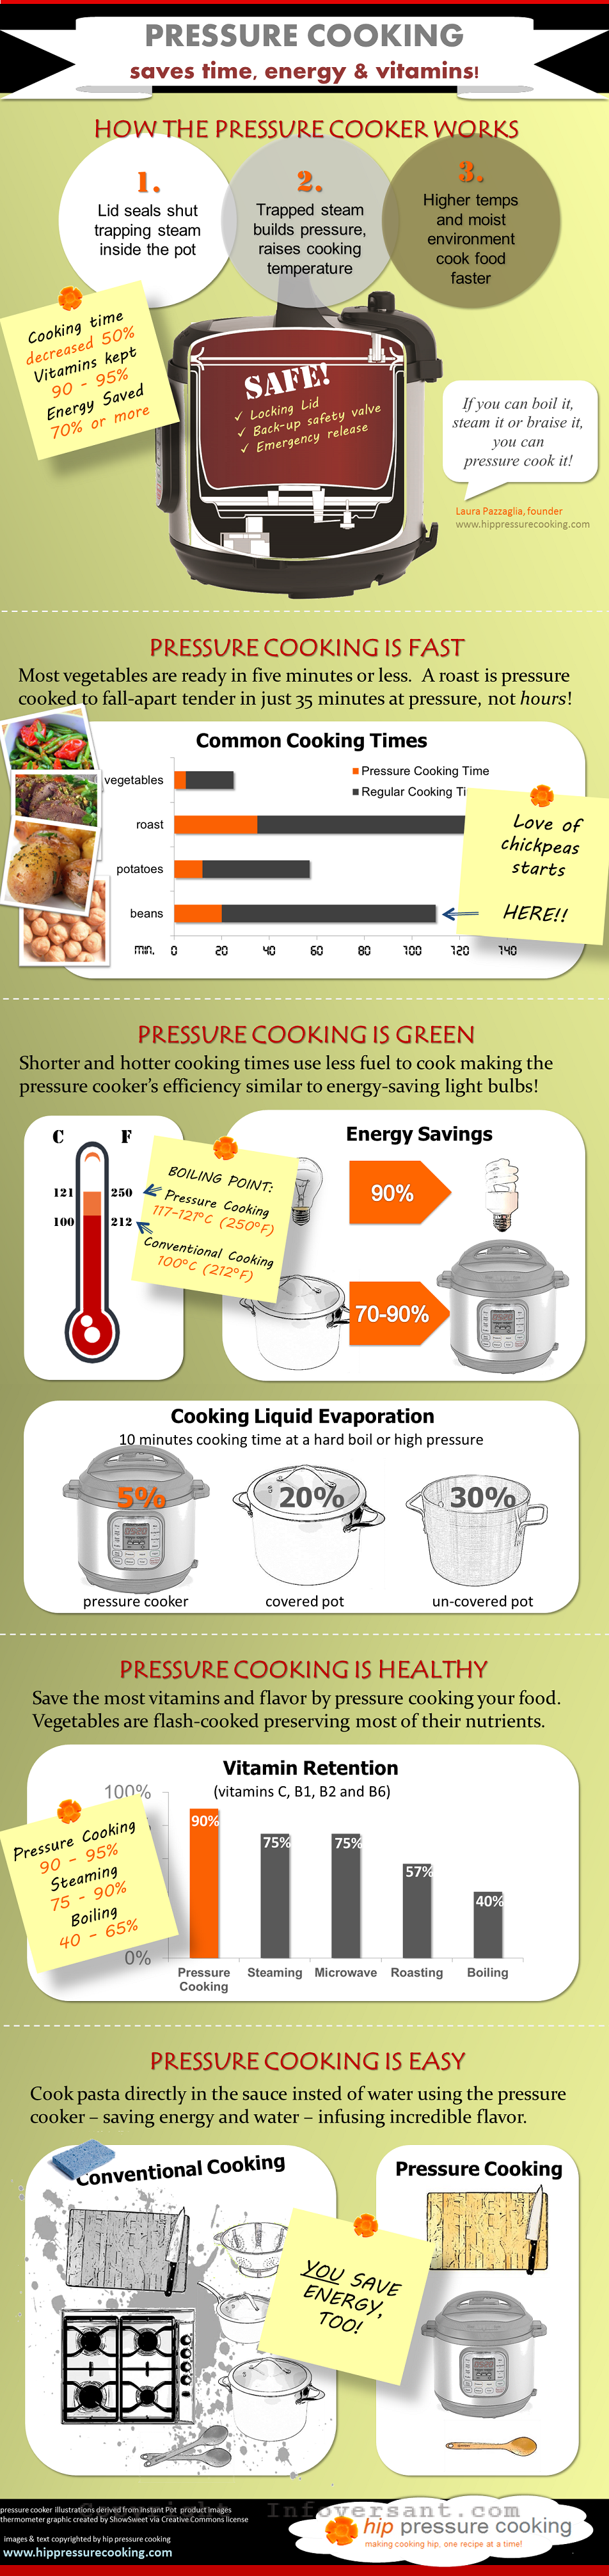 pressure cook - save energy